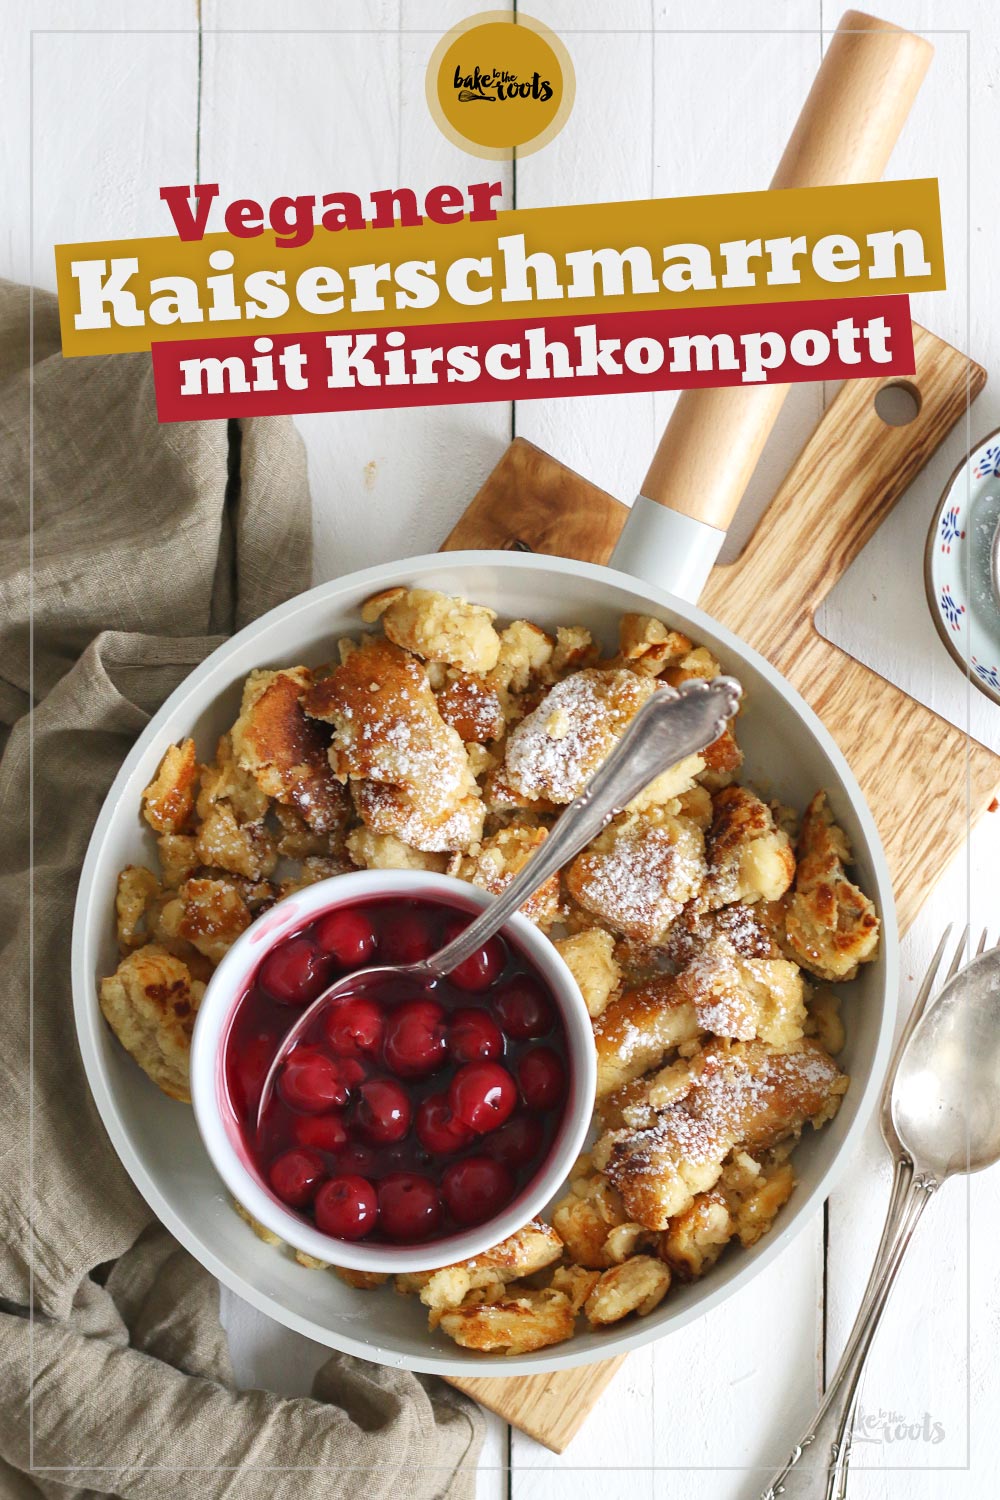 Veganer Kaiserschmarren mit Kirschkompott | Bake to the roots